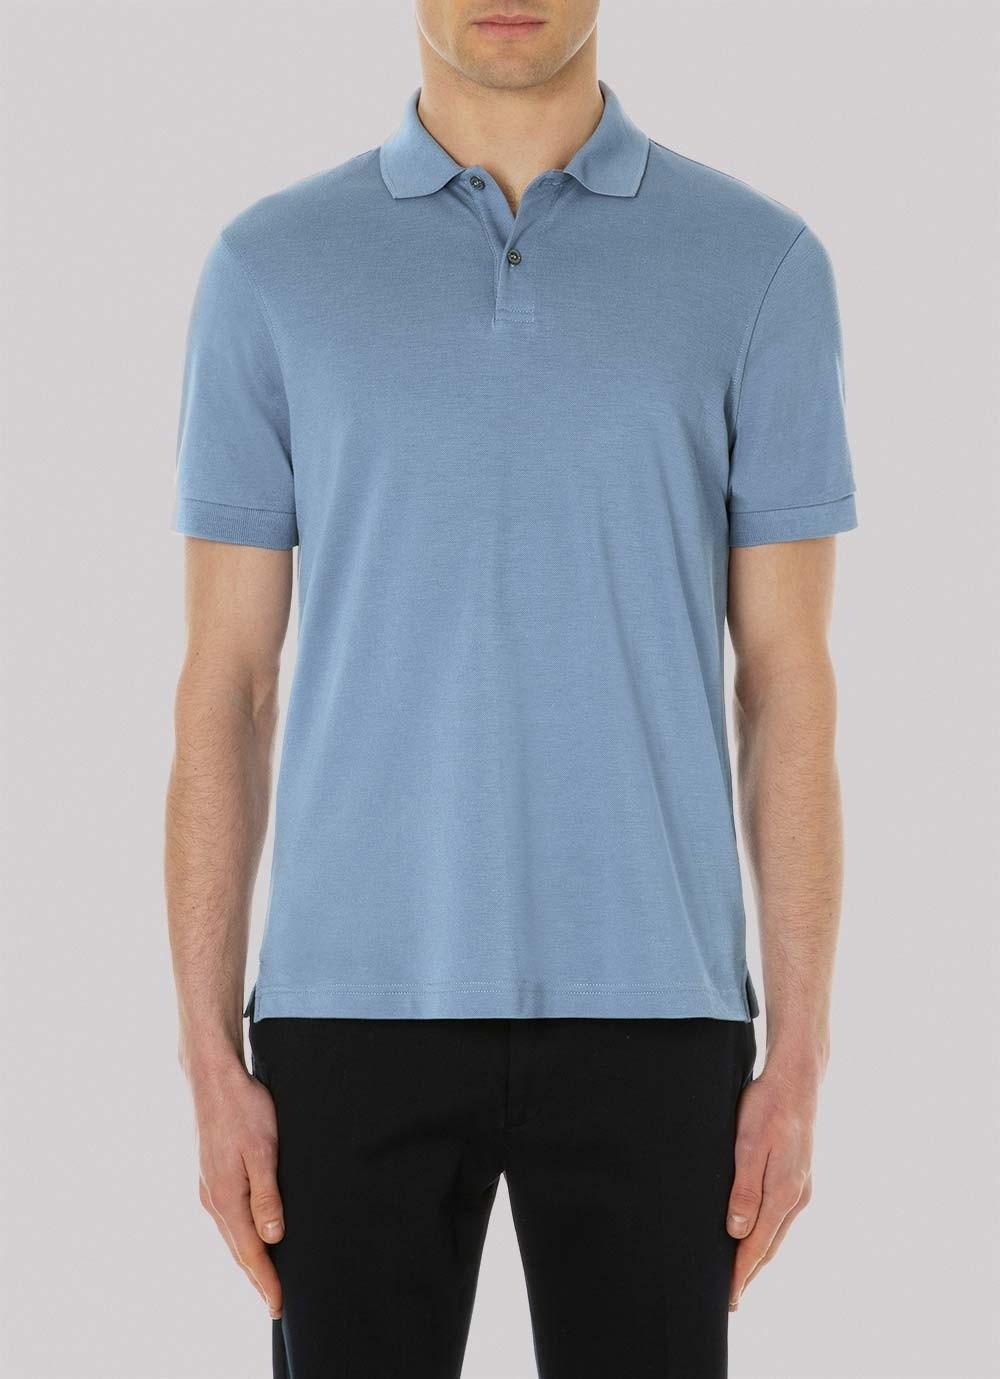 Sunspel Men's Cotton Piqué Polo Shirt In Fern Blue for Men - Lyst